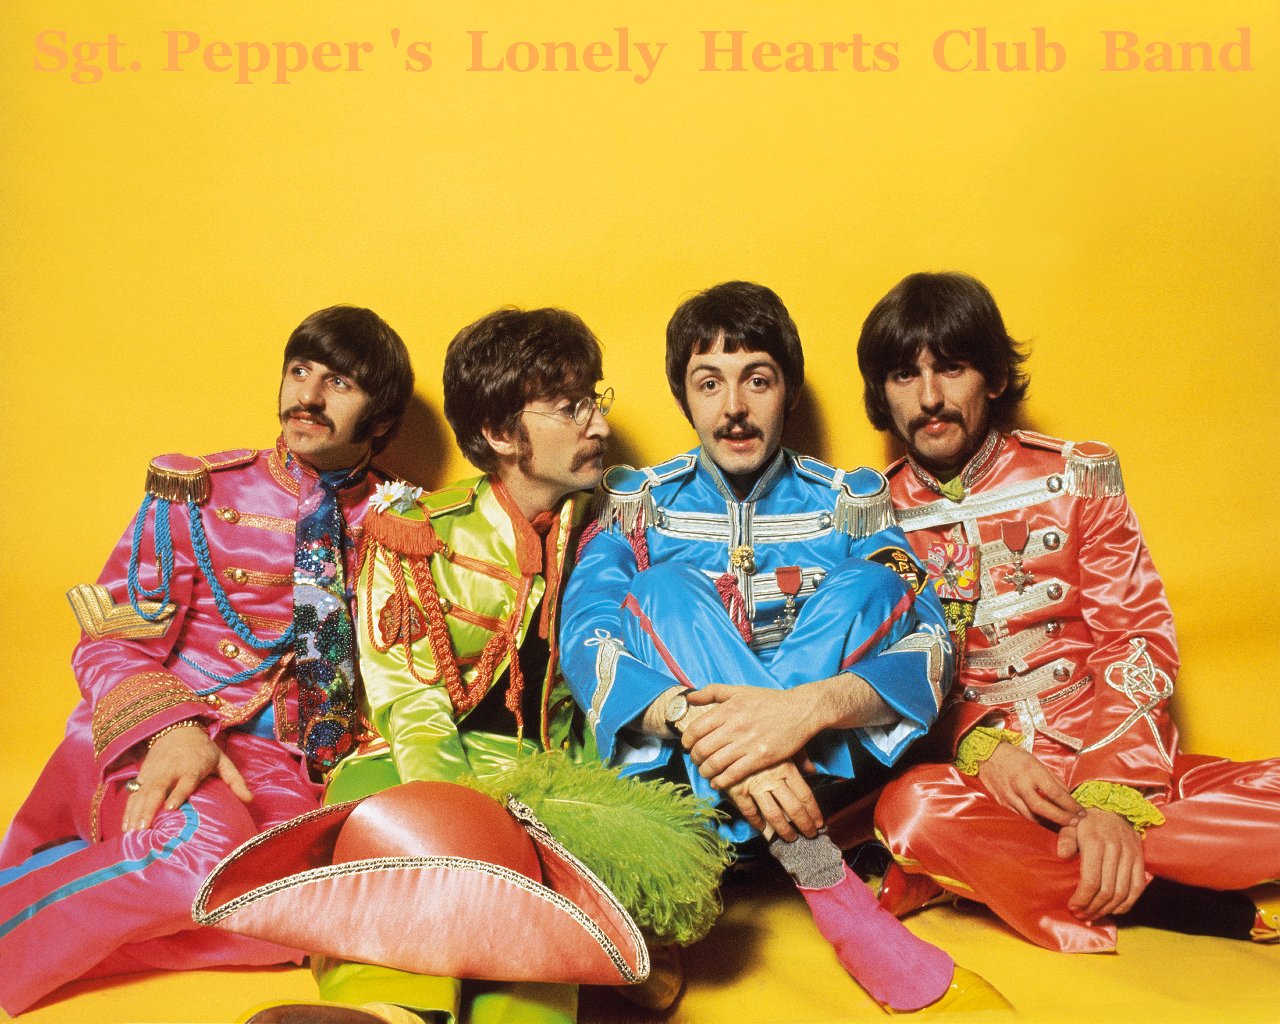 Beatles - The Beatles Stereo Vinyl Box Set - amazoncom